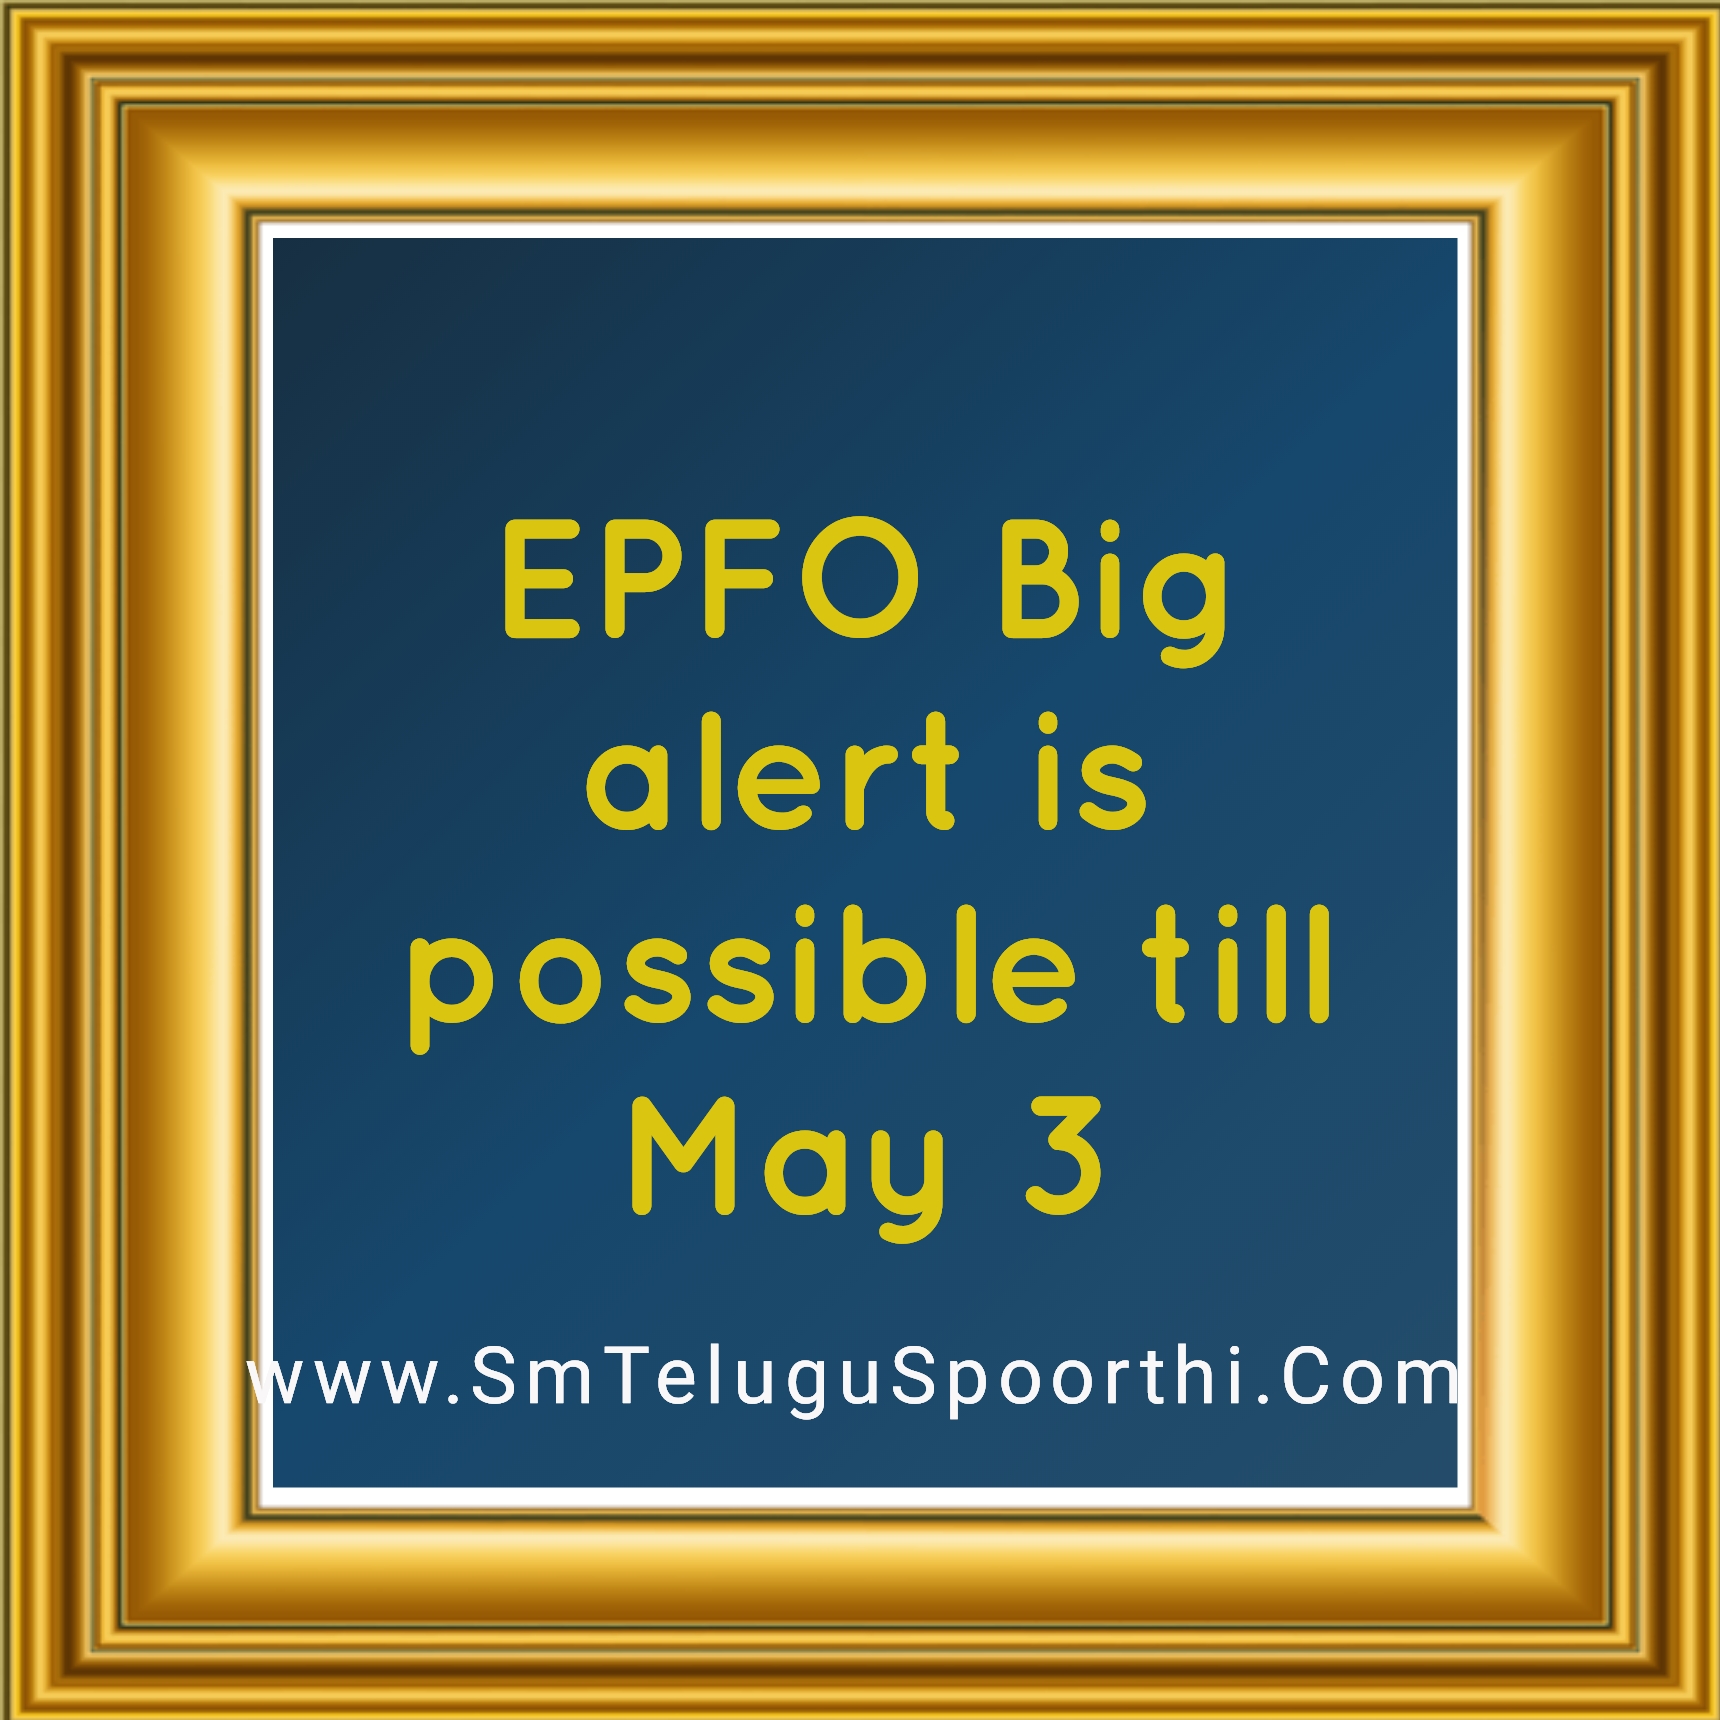 EPFO Big alert is possible till May 3